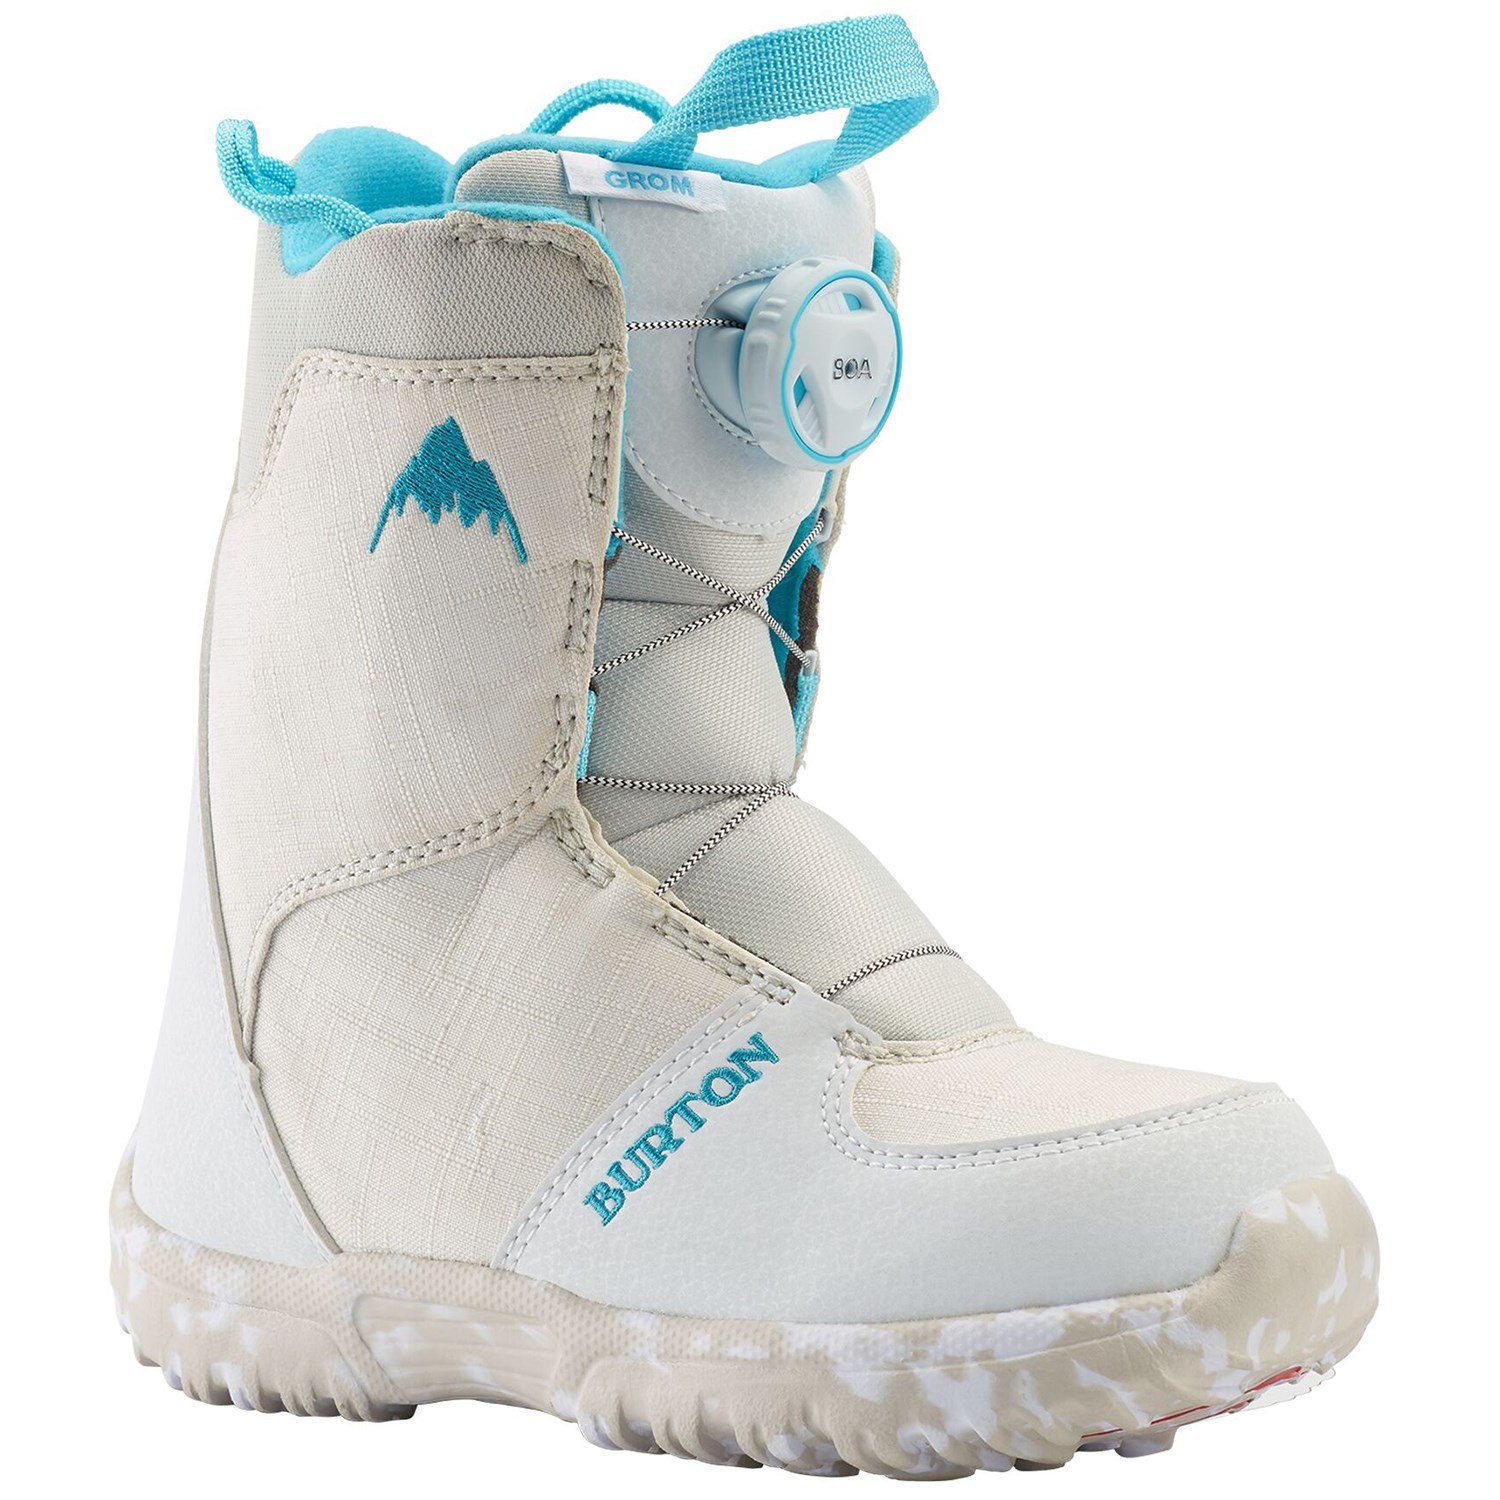 Ботинки для сноубординга Burton Grom Boa, белый детские сноубордические ботинки burton grom boa р 11c white